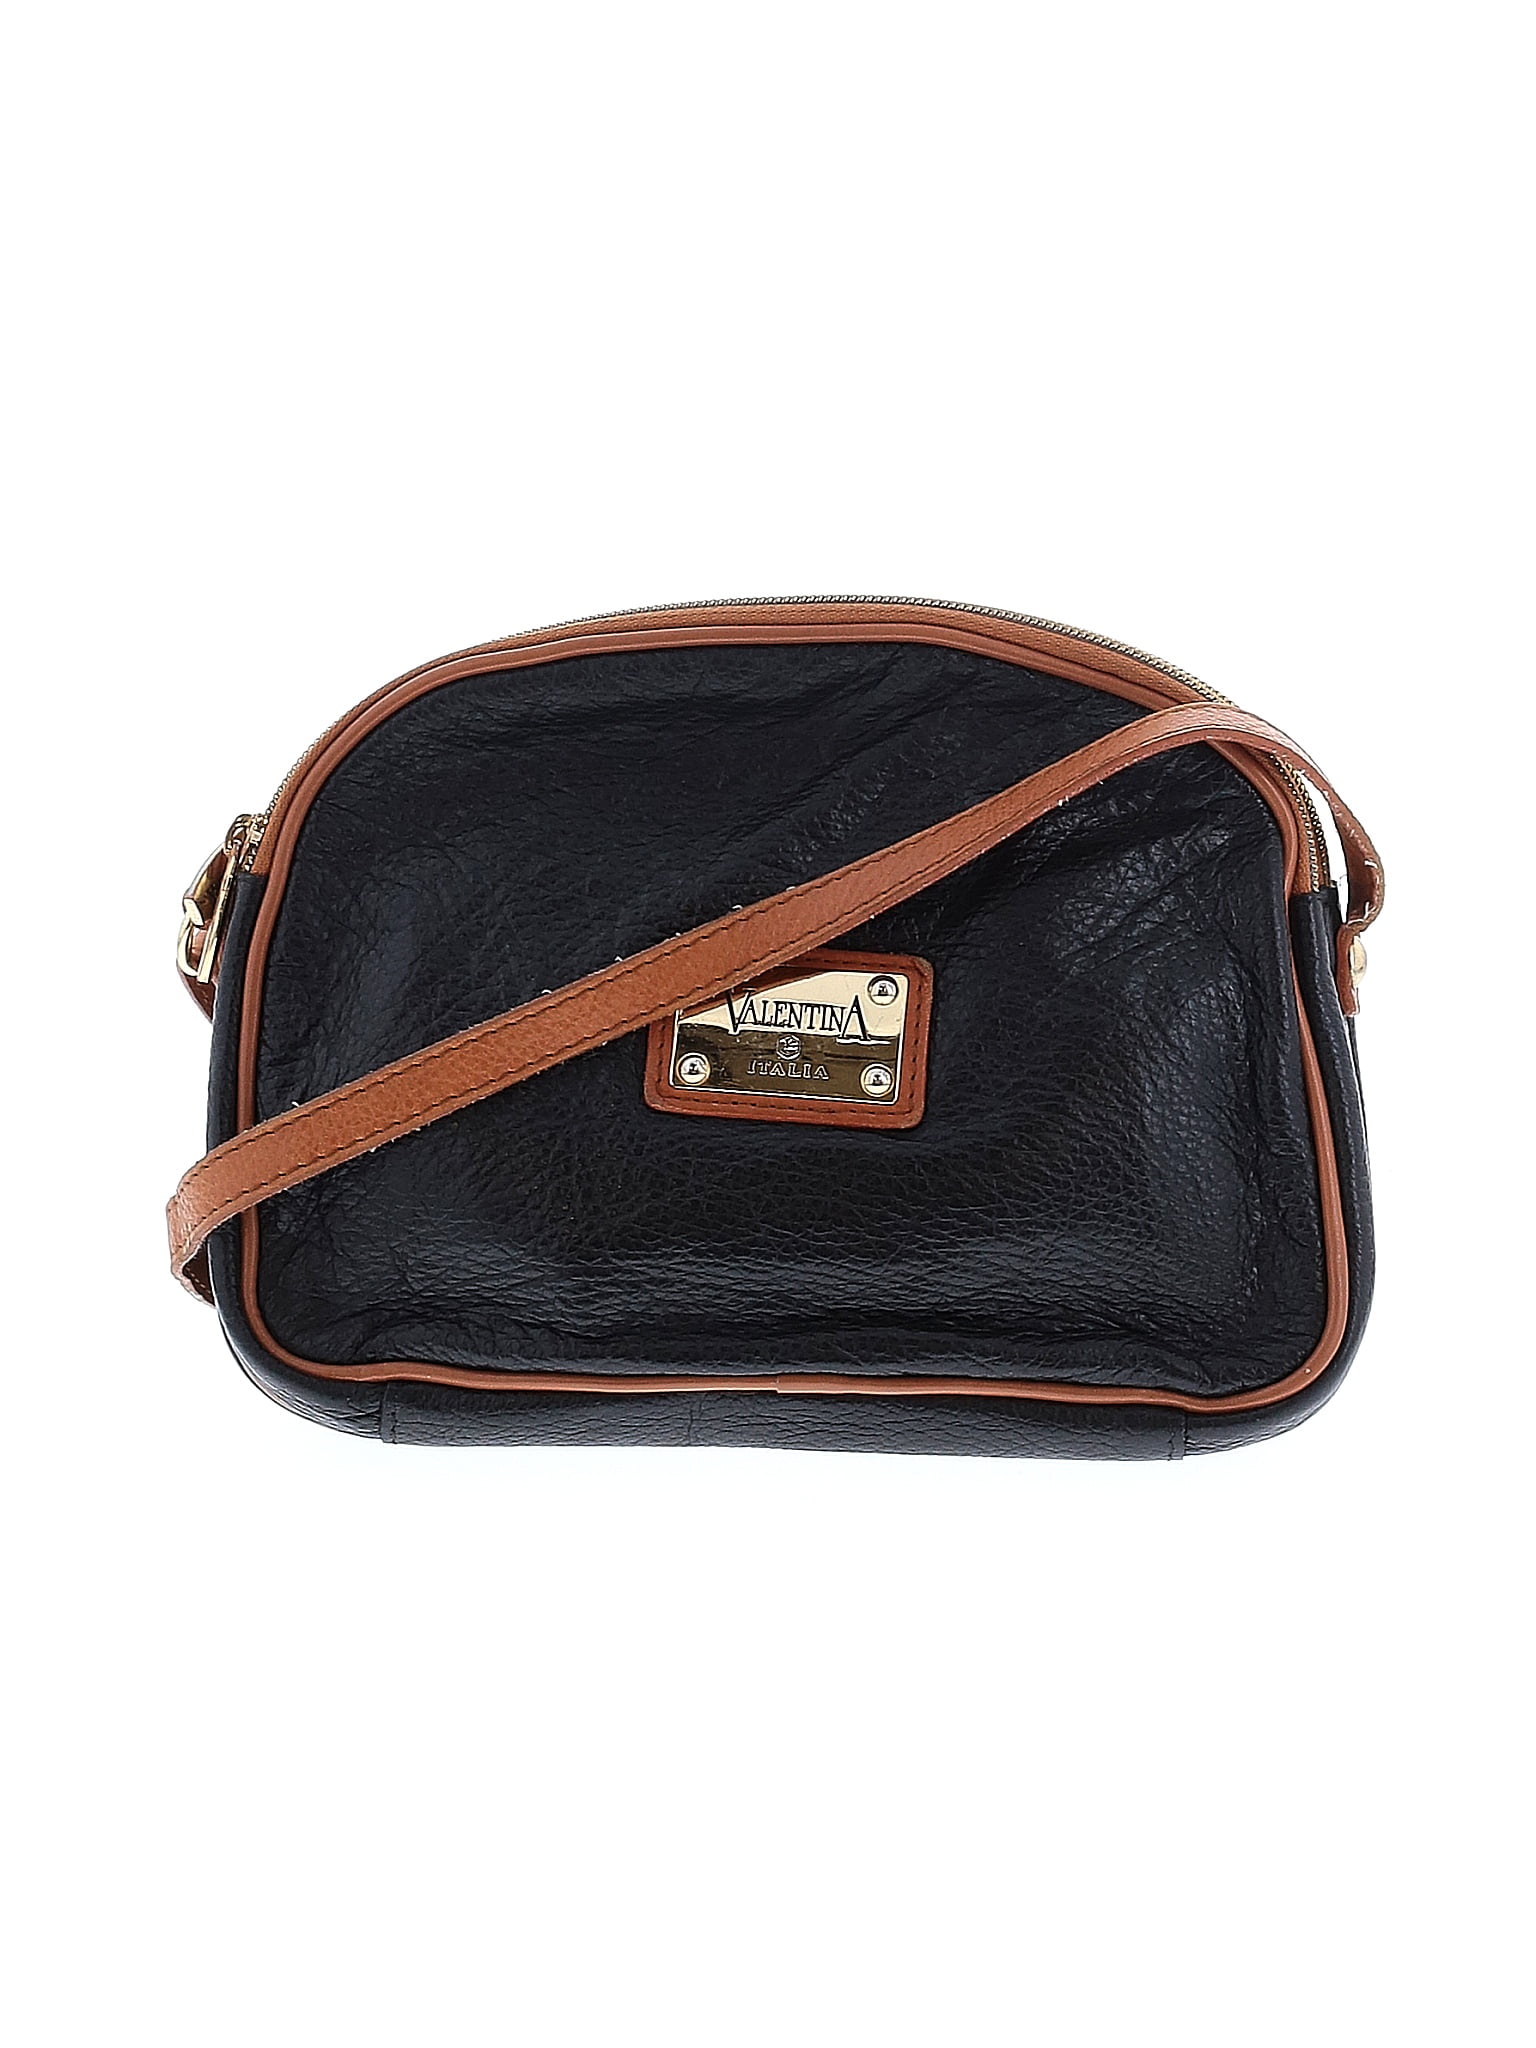 Valentina Handbags On Sale Up To 90% Off Retail | thredUP